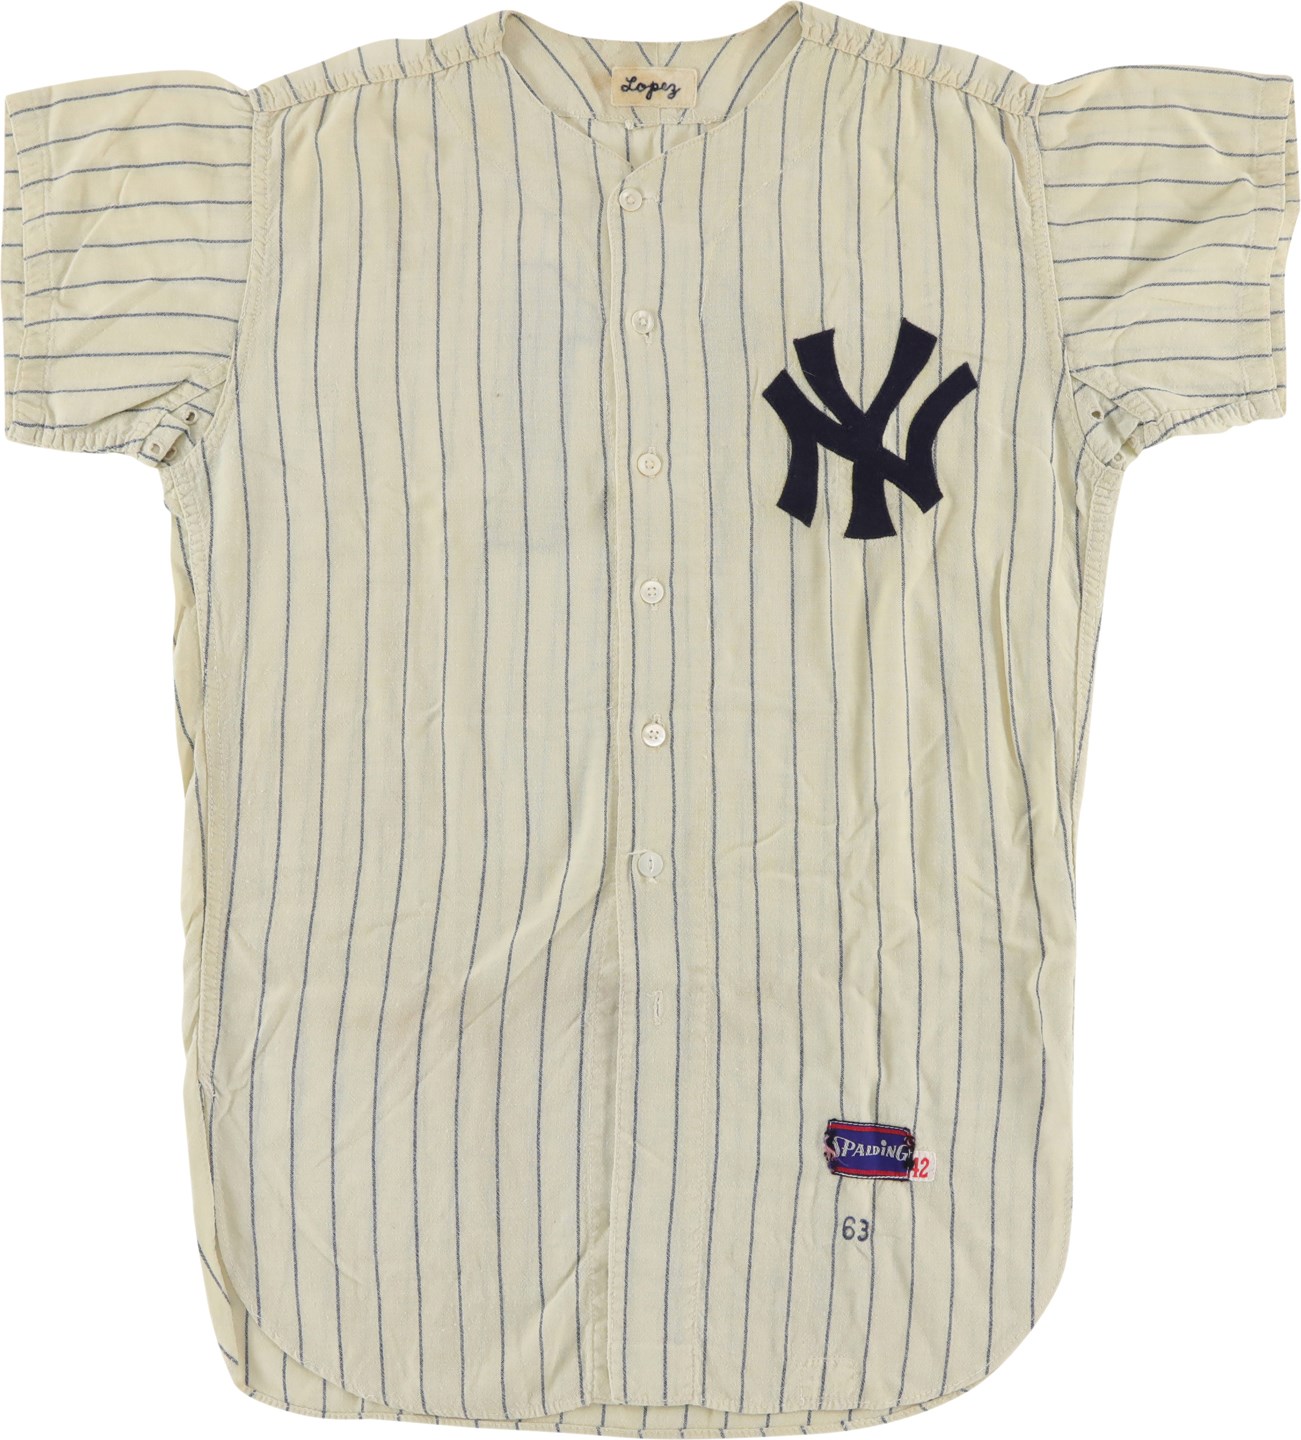 1963 Hector Lopez New York Yankees Game Worn Jersey